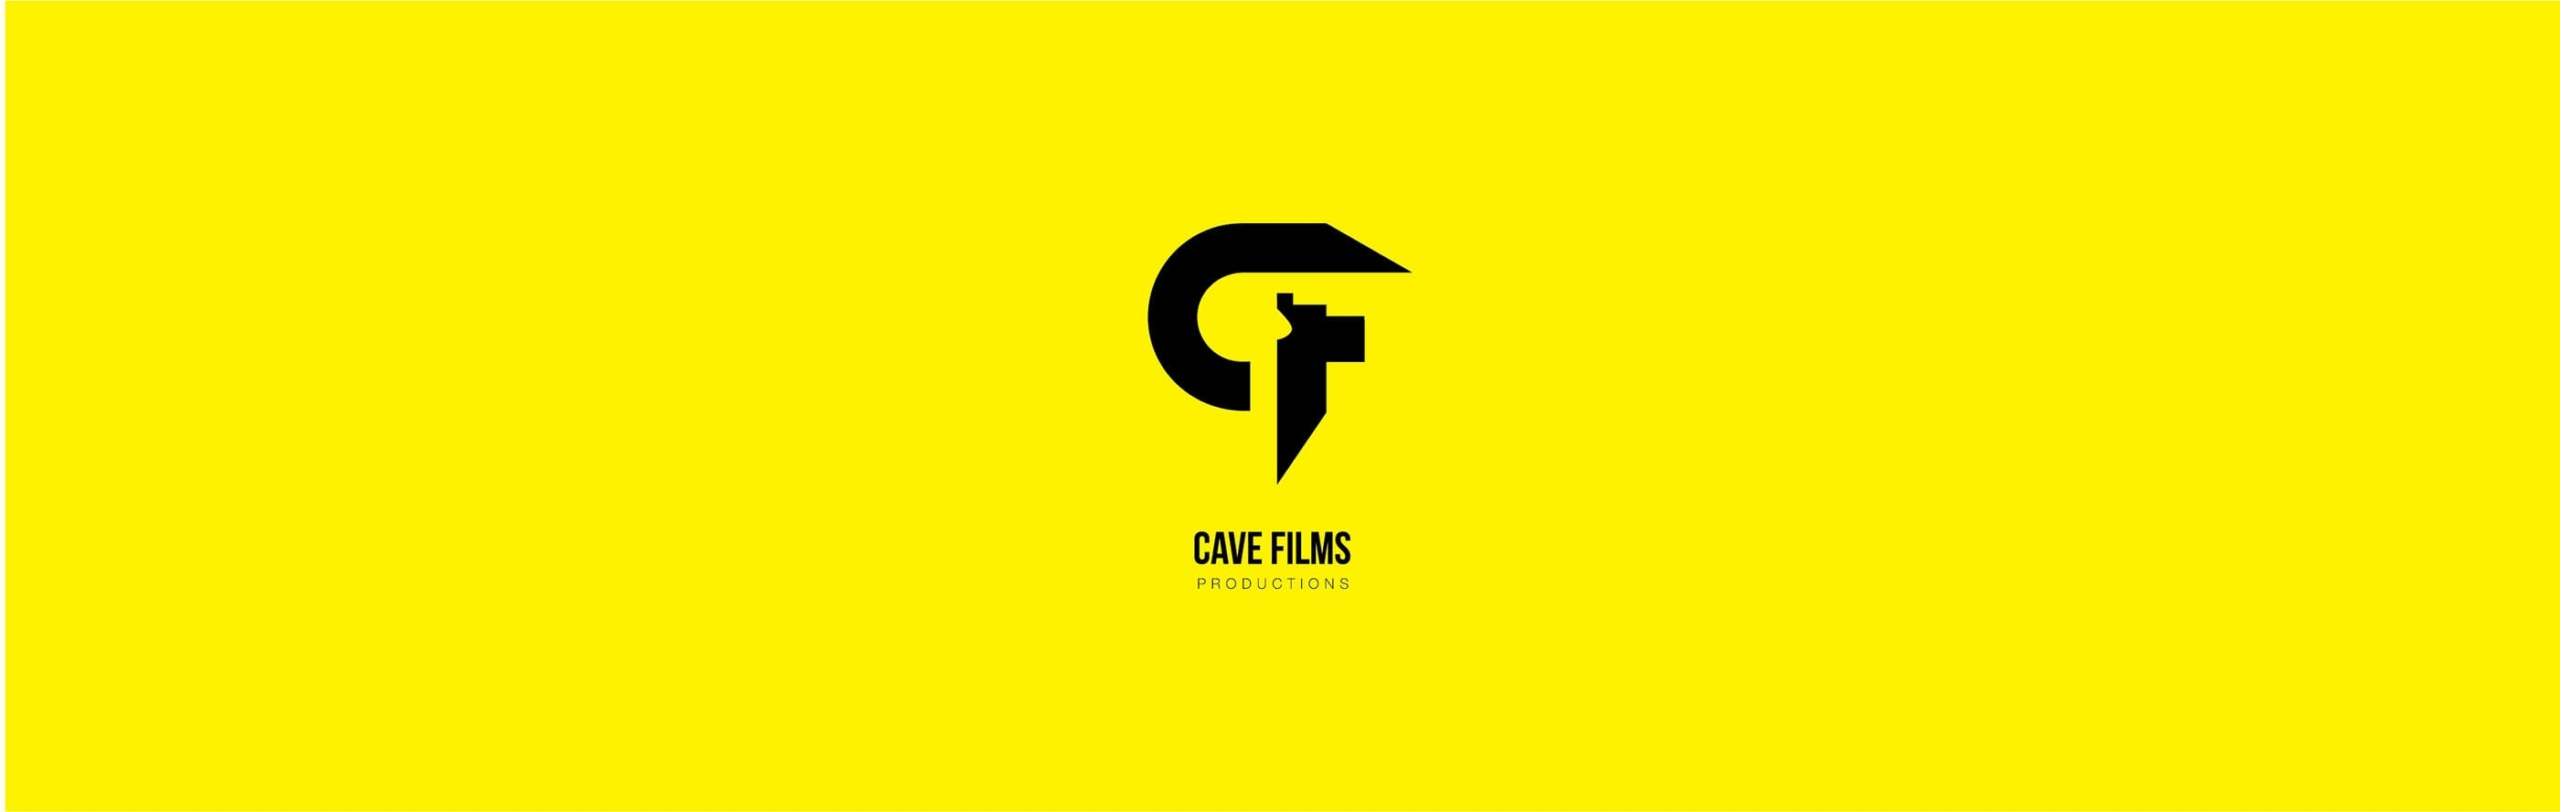 film company logo